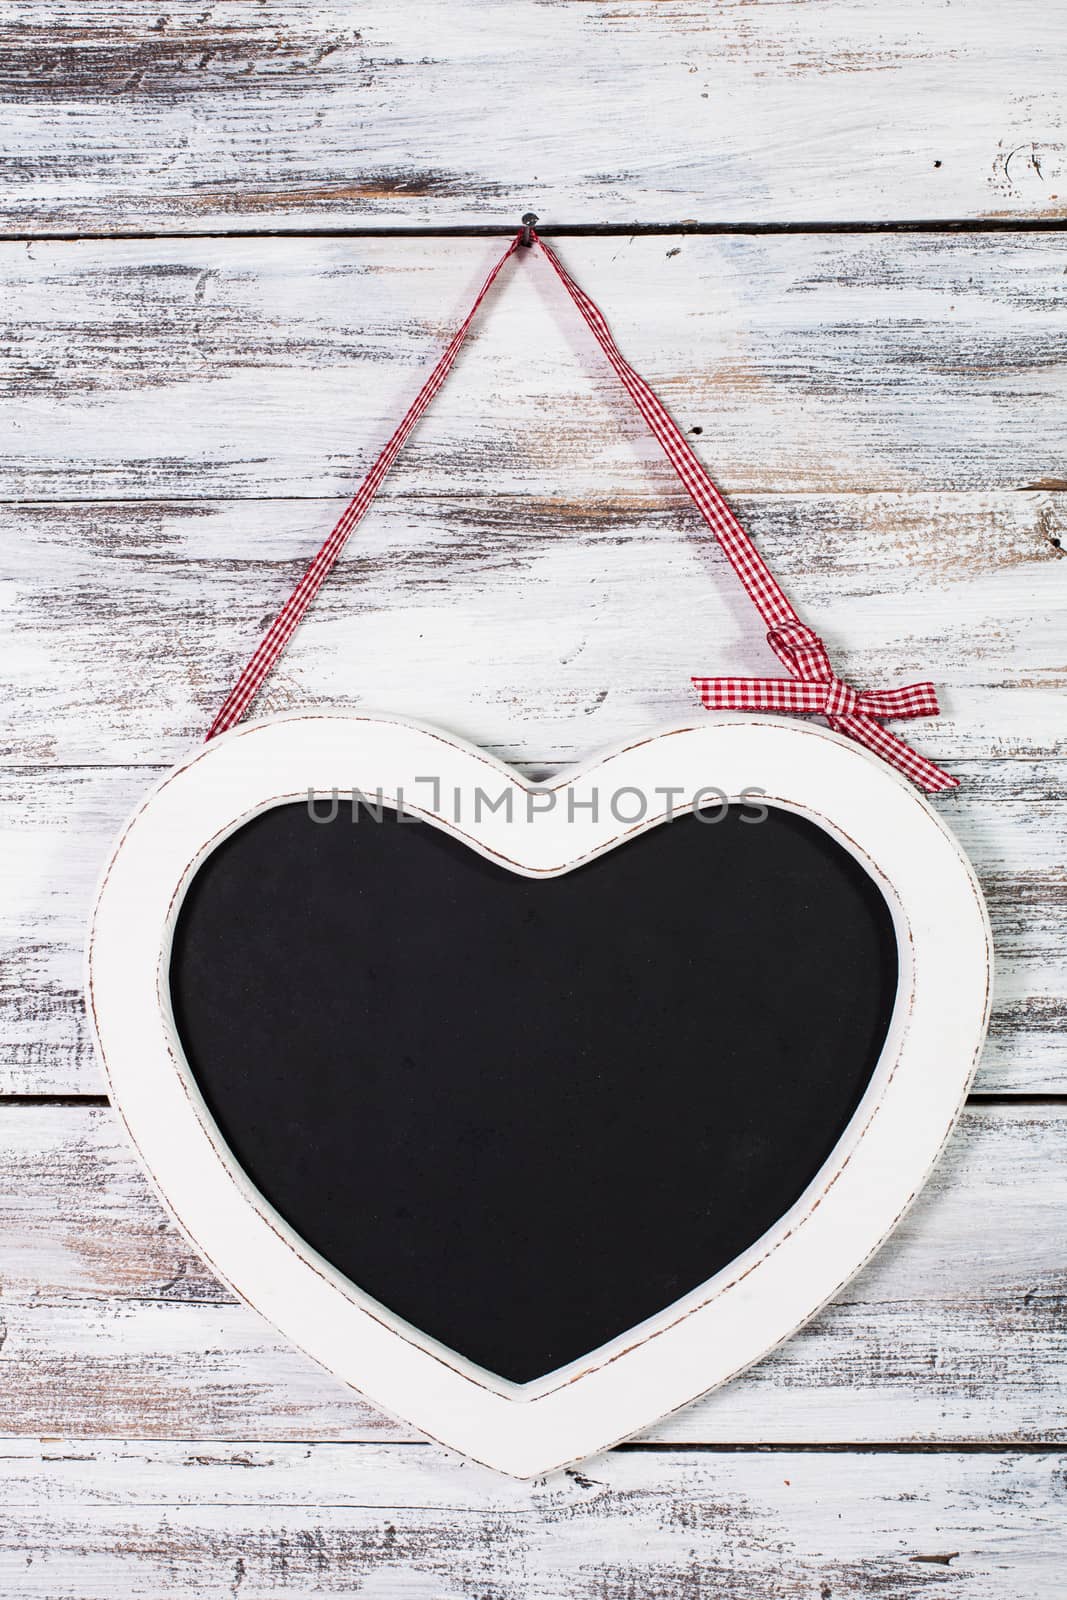 The heart shape chalkboard over shabby wooden background